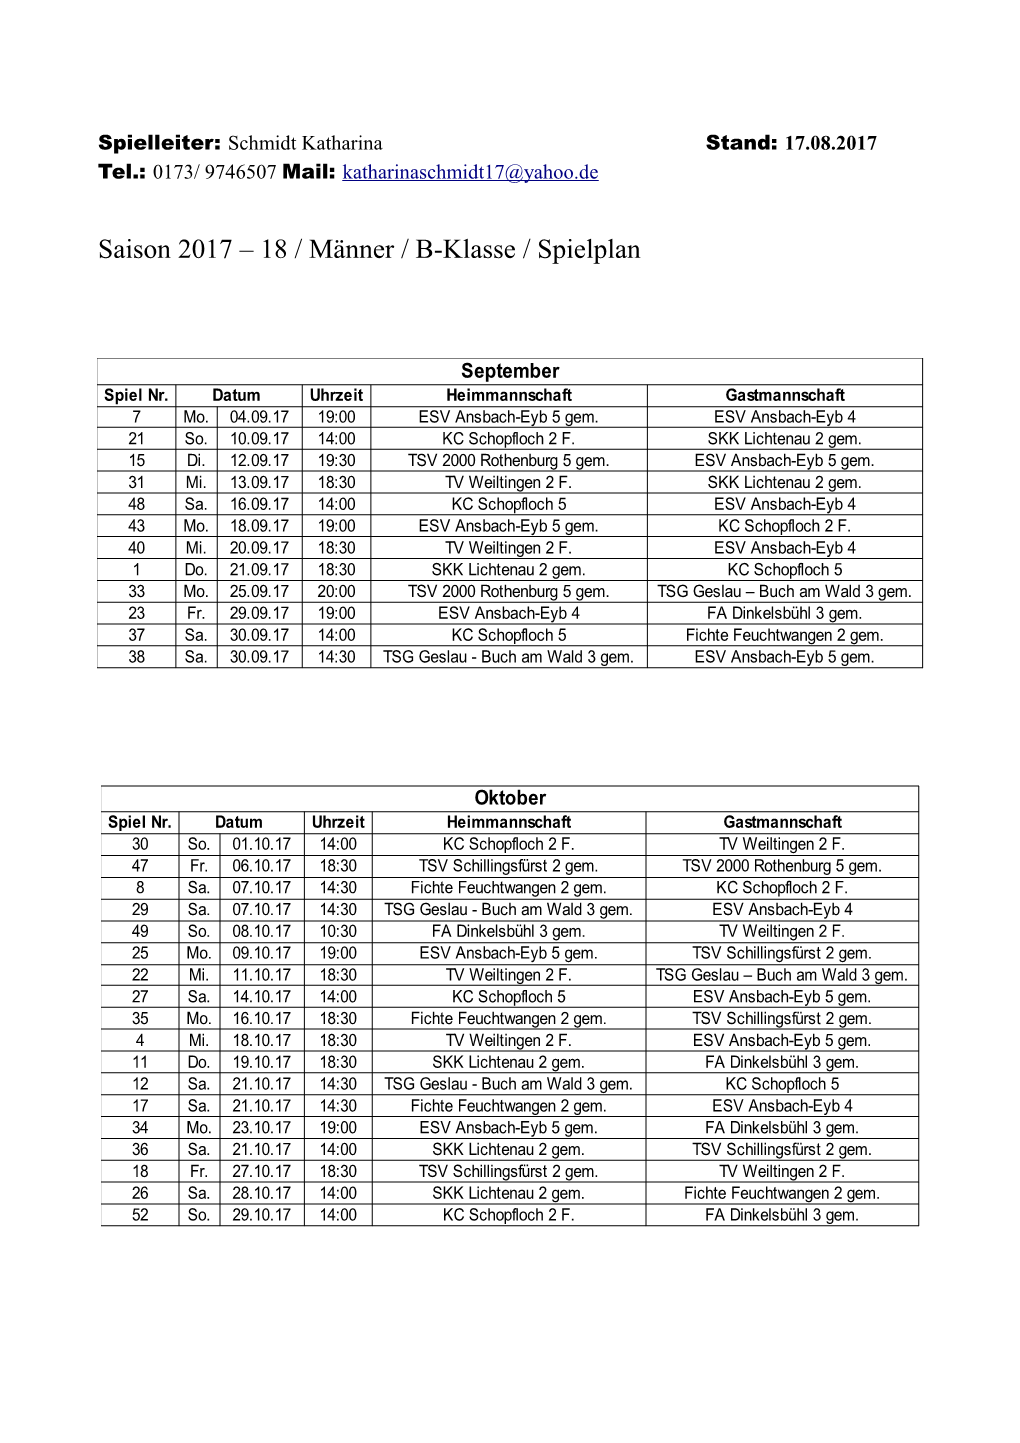 Saison 2017 – 18 / Männer / B-Klasse / Spielplan